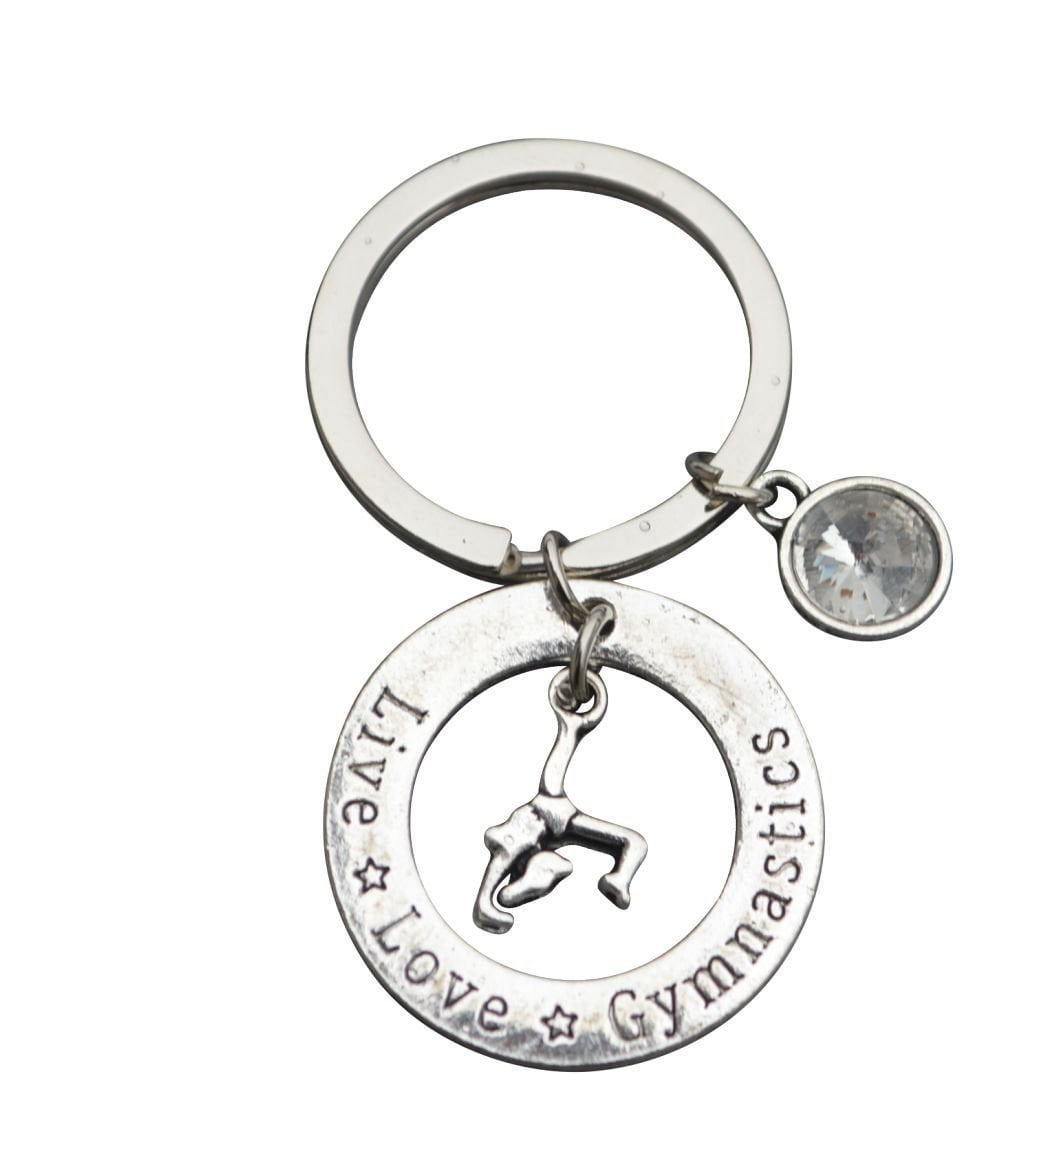 Details about   2017 fashion I Love Gymnastics keychain women men jewelry charms key ring #61 